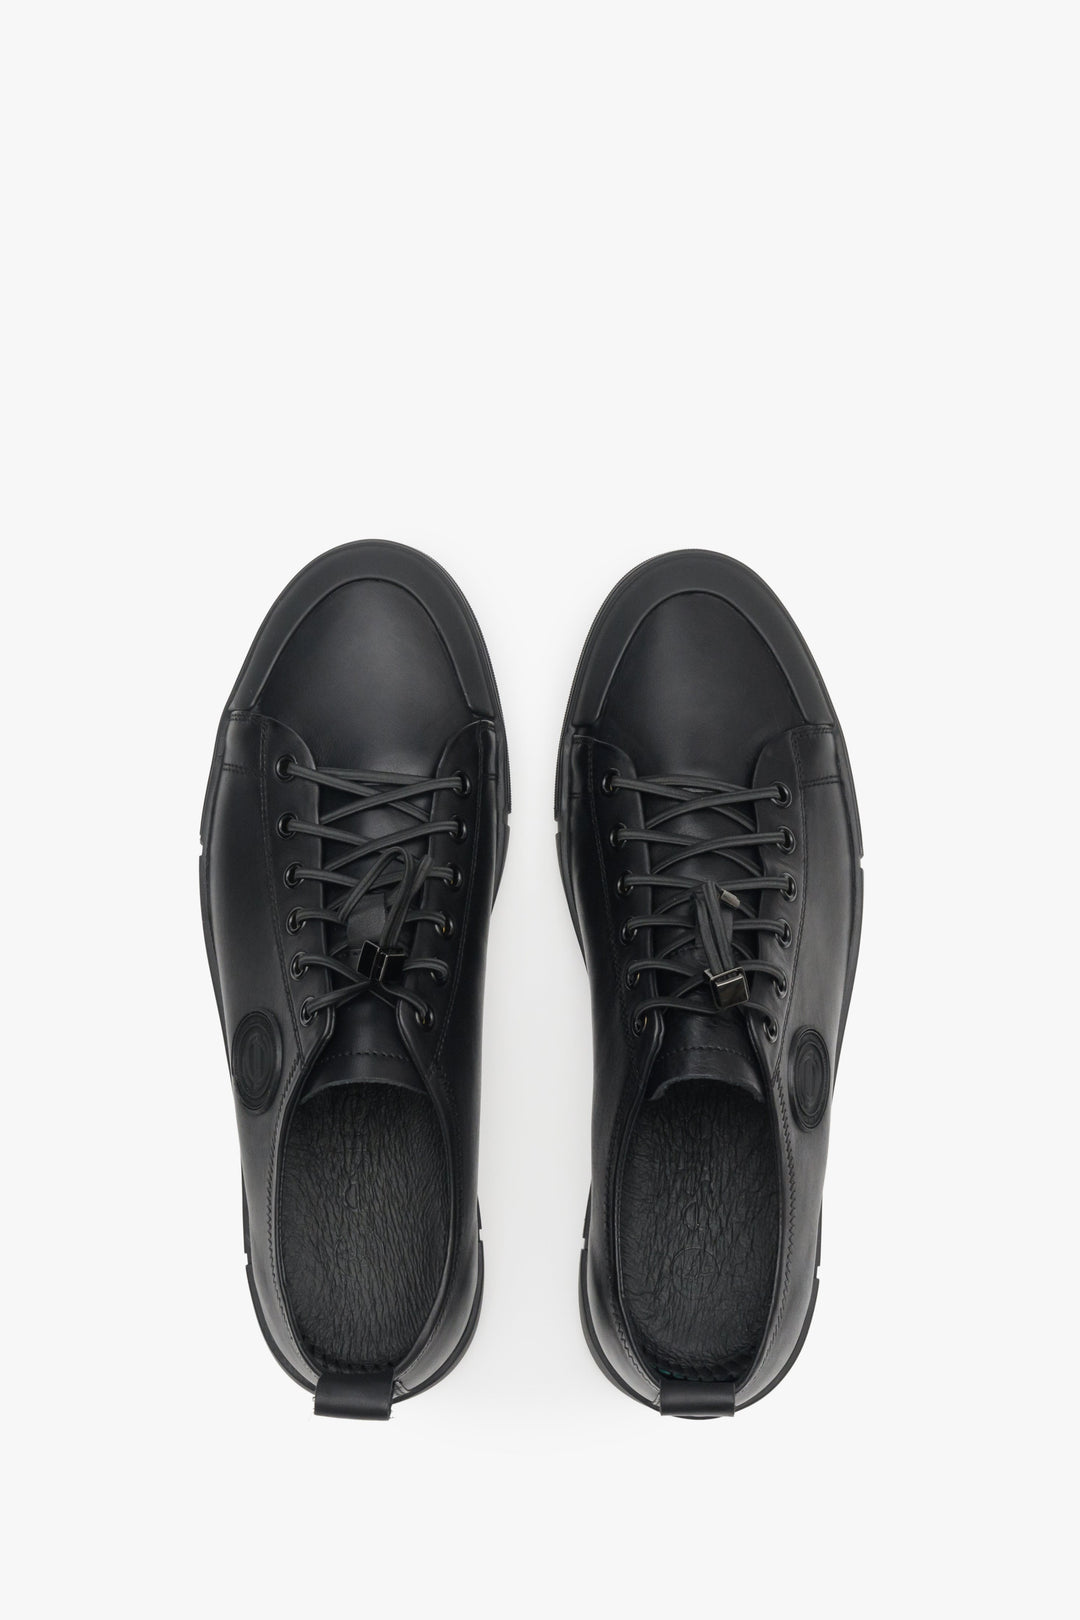 Estro men's sneakers in black made of genuine leather - top view presentation of the footwear.